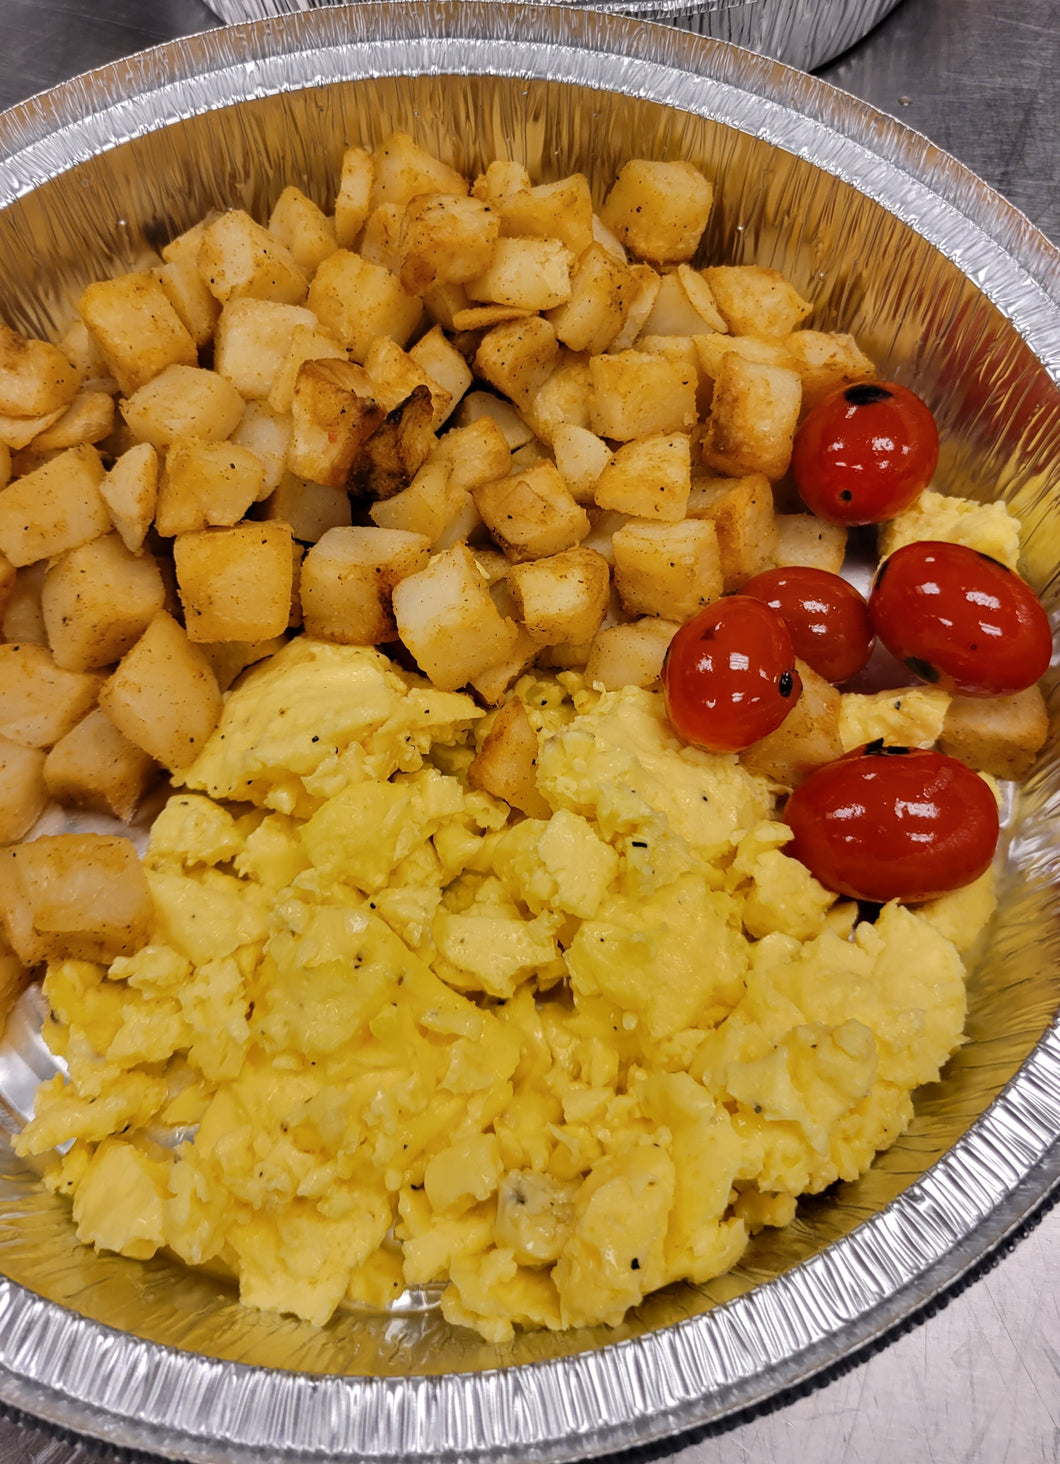 #7 Scrambled Eggs and Hash Brown Potatoes